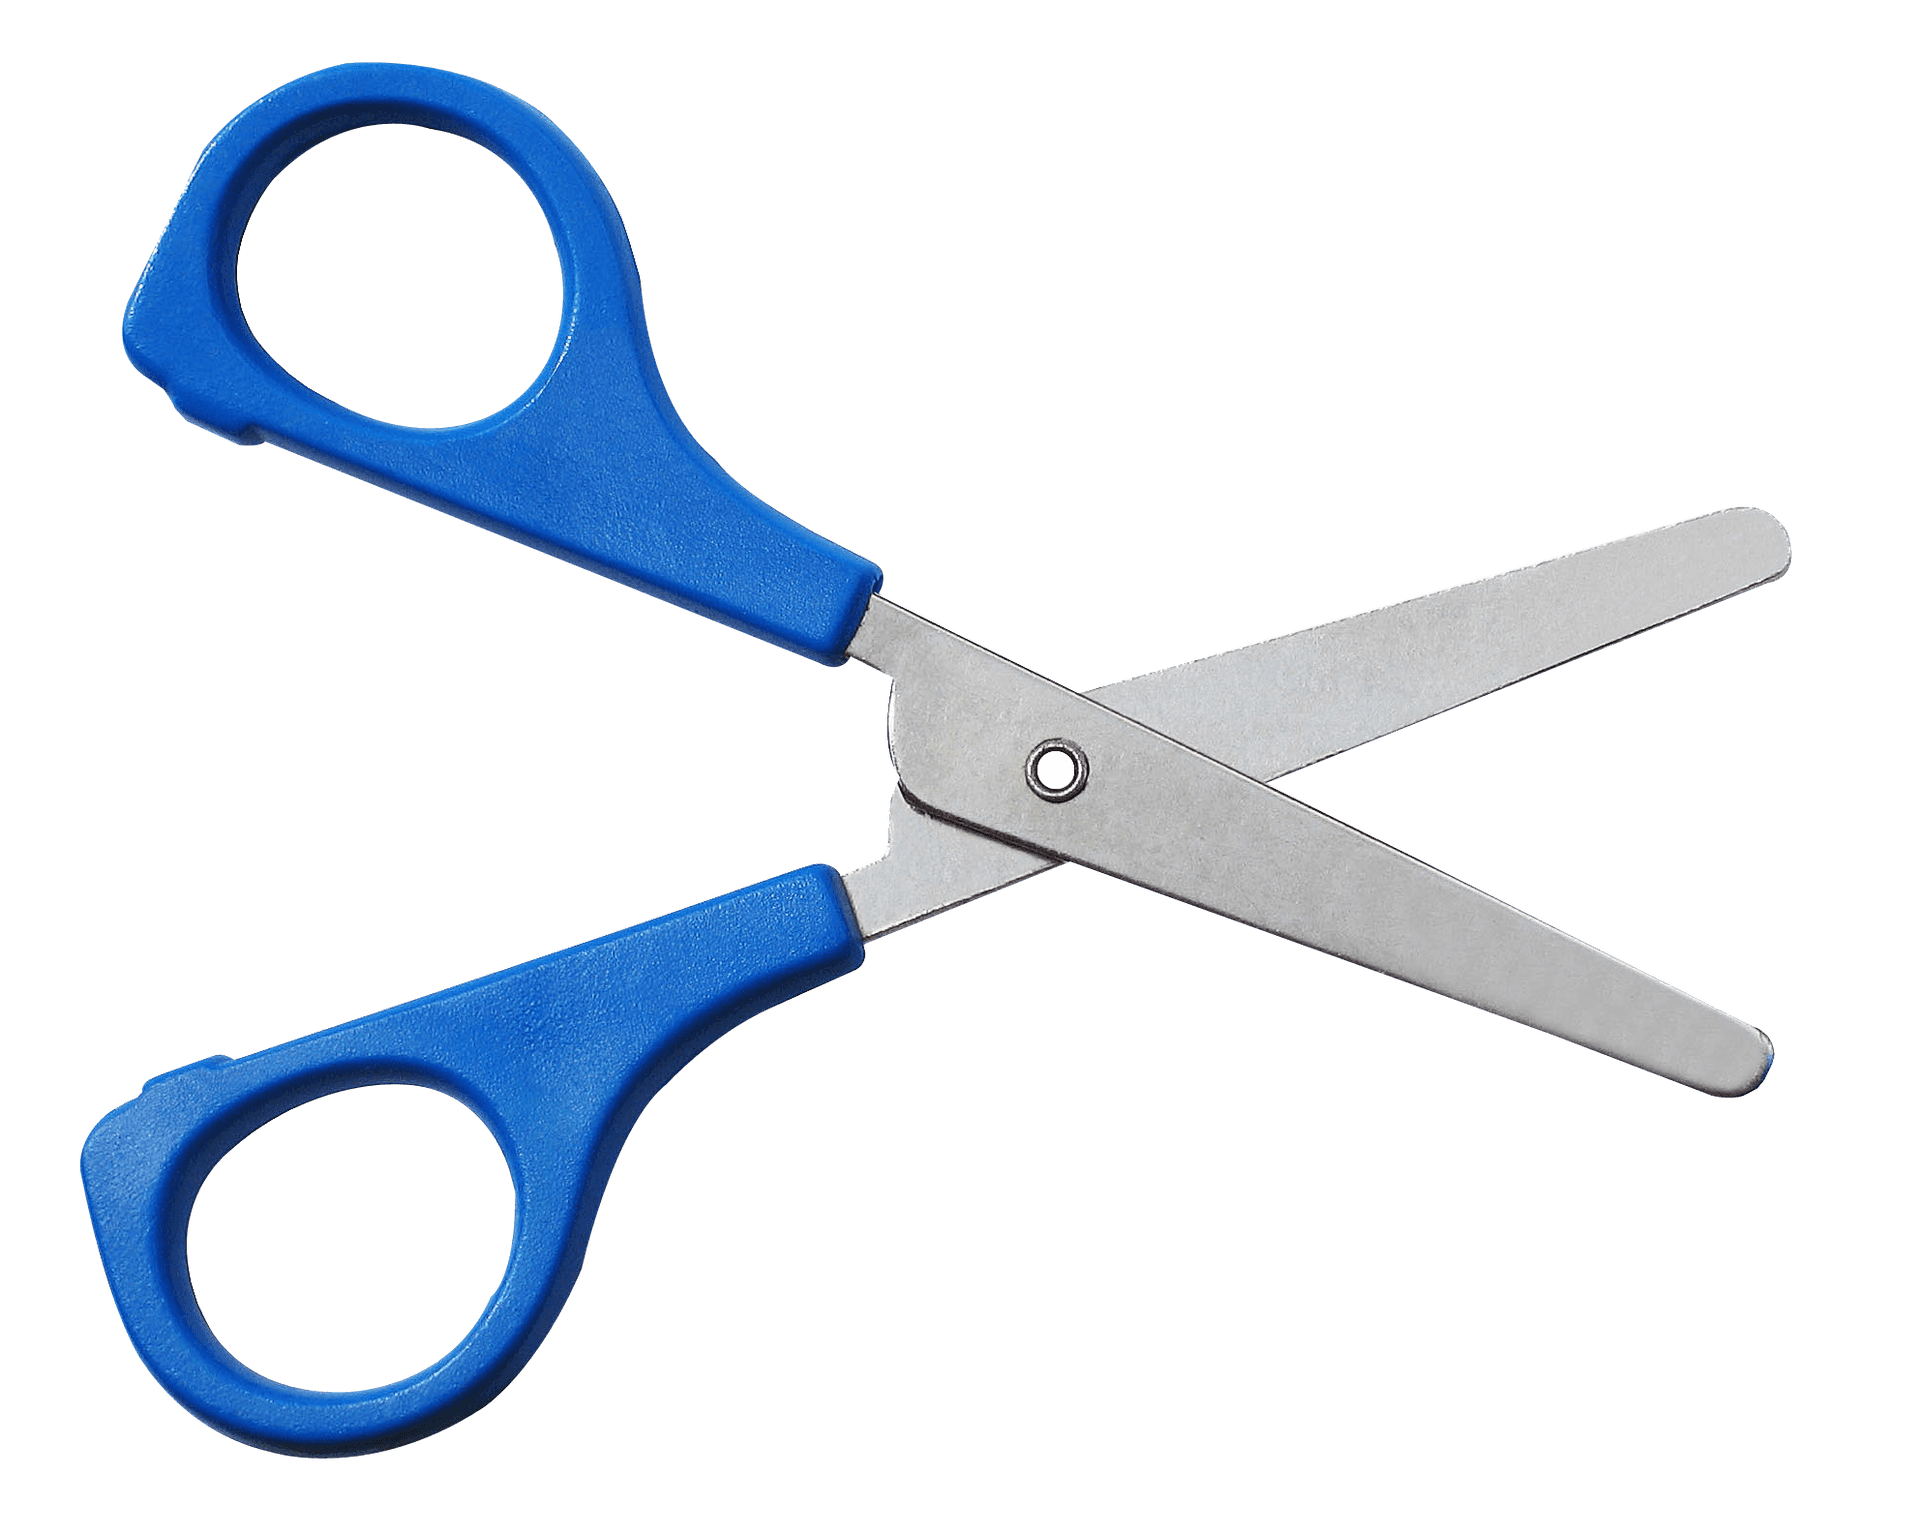 Blue Handled Scissors Open PNG